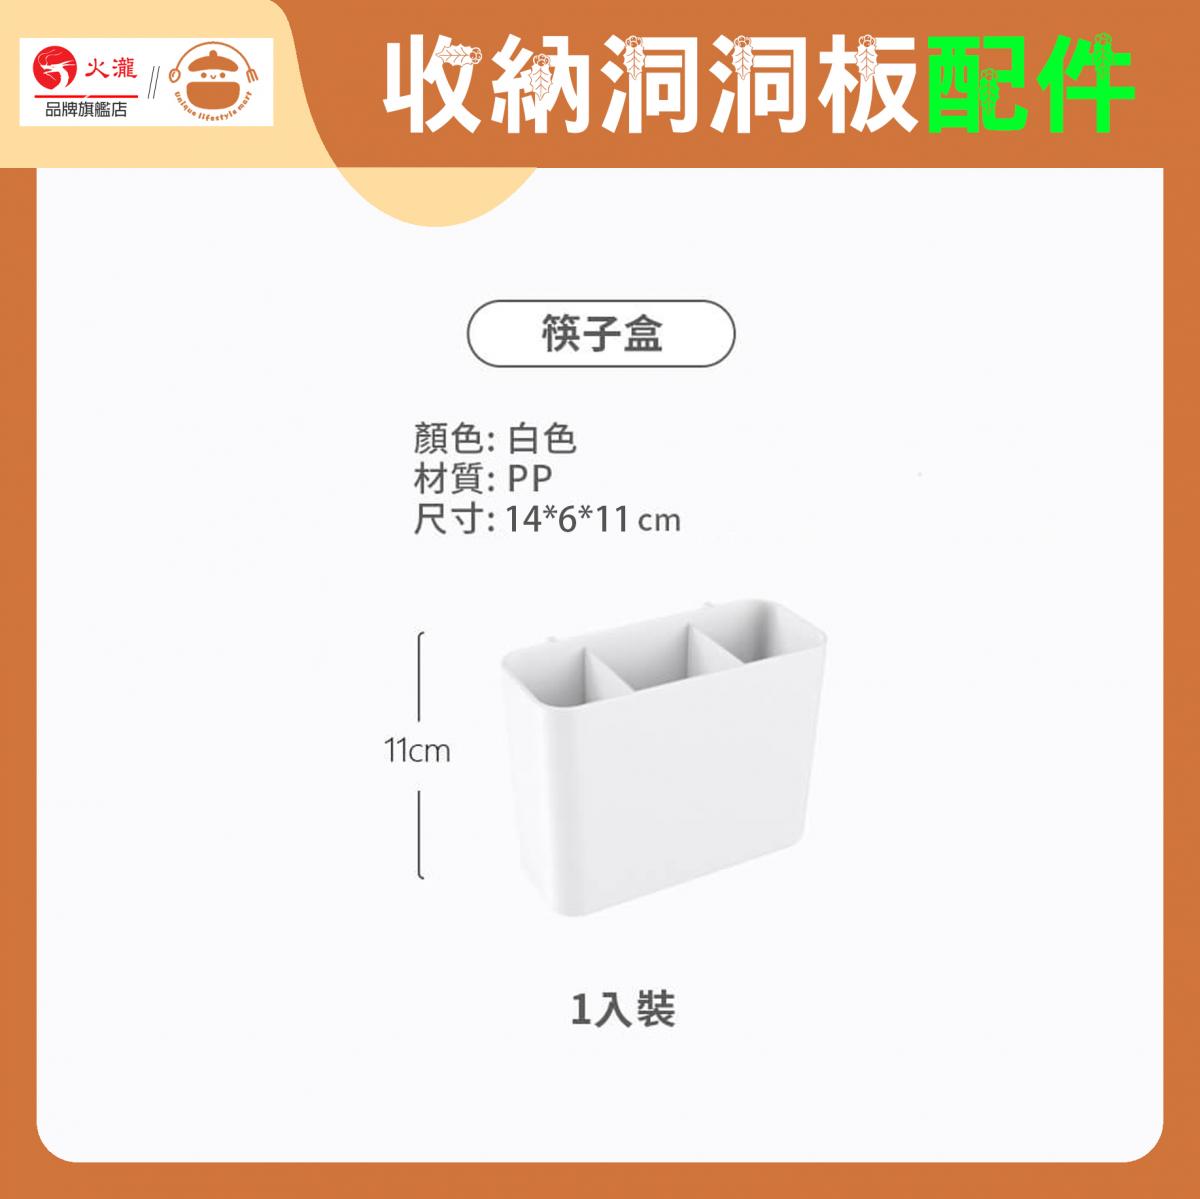 Nail-free Storage Perforated Board Accessories 【Chopsticks Box】- Bathroom Kitchen Wall Decoration